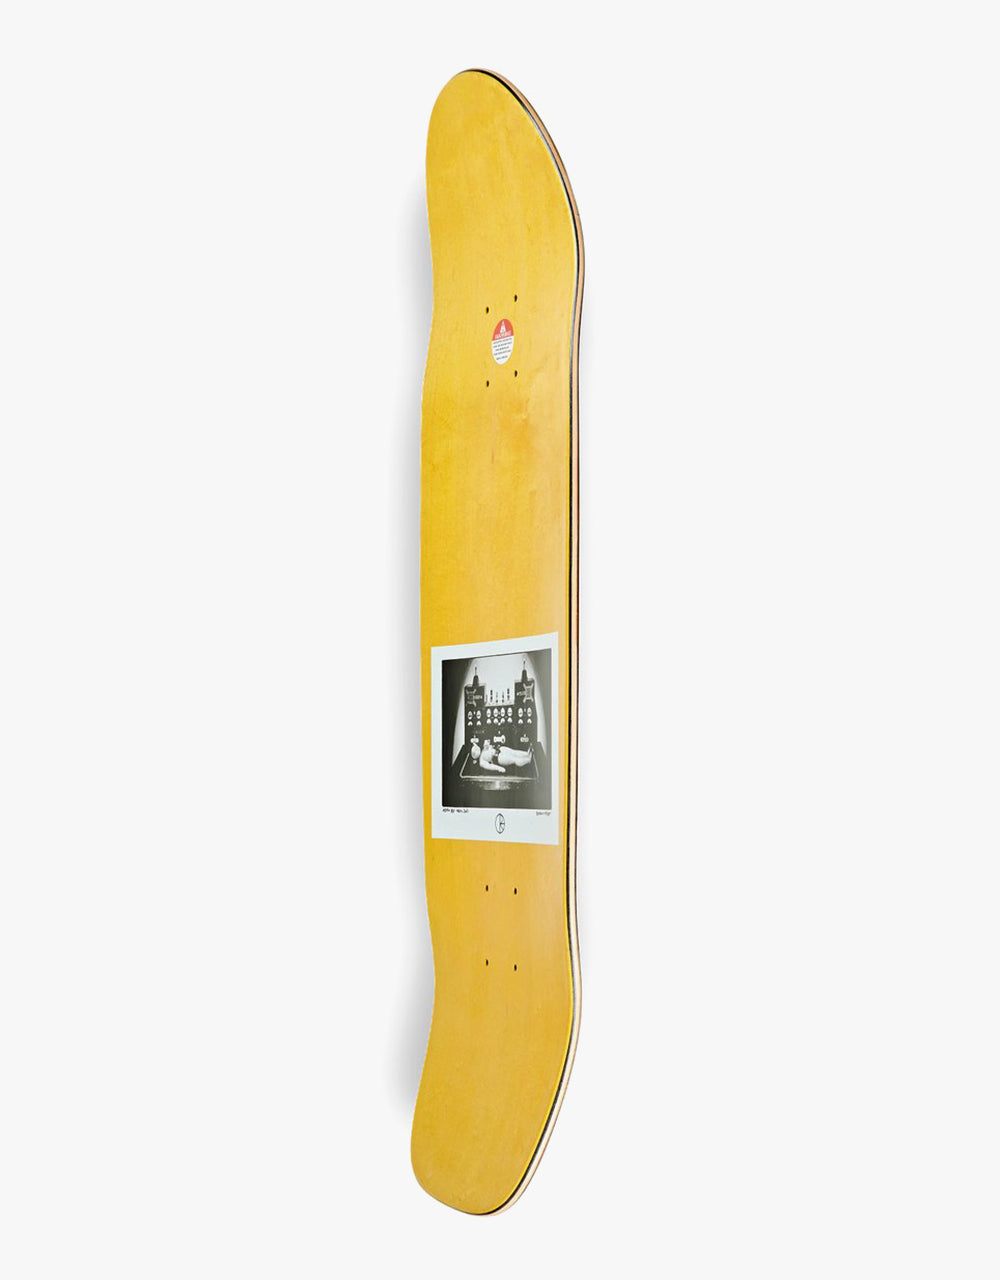 Polar Sanbongi Astro Boy Skateboard Deck - SURF Jr. Shape 8.75"